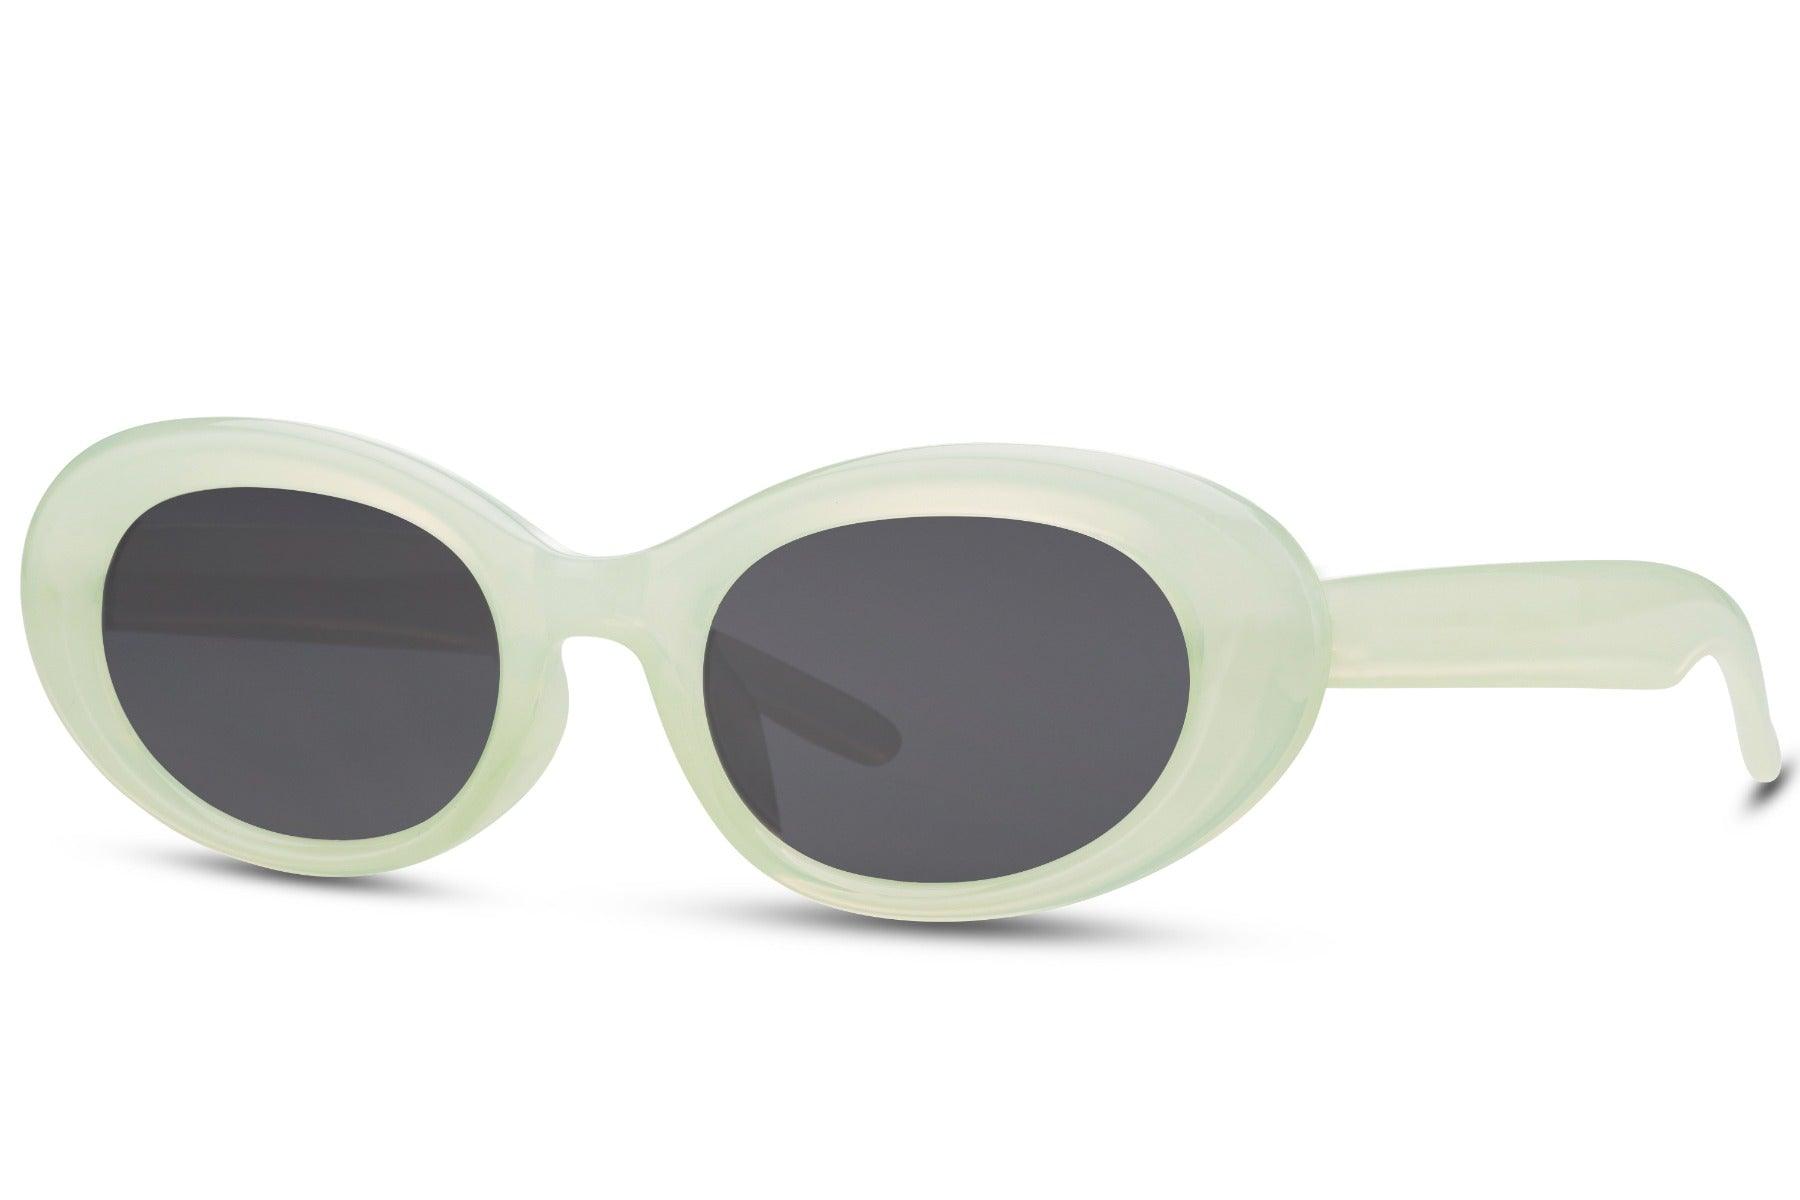 Pulp Melon Green Round Mod Sunglasses - Blissfully Brand - Circle Retro Funky Girly Sleek